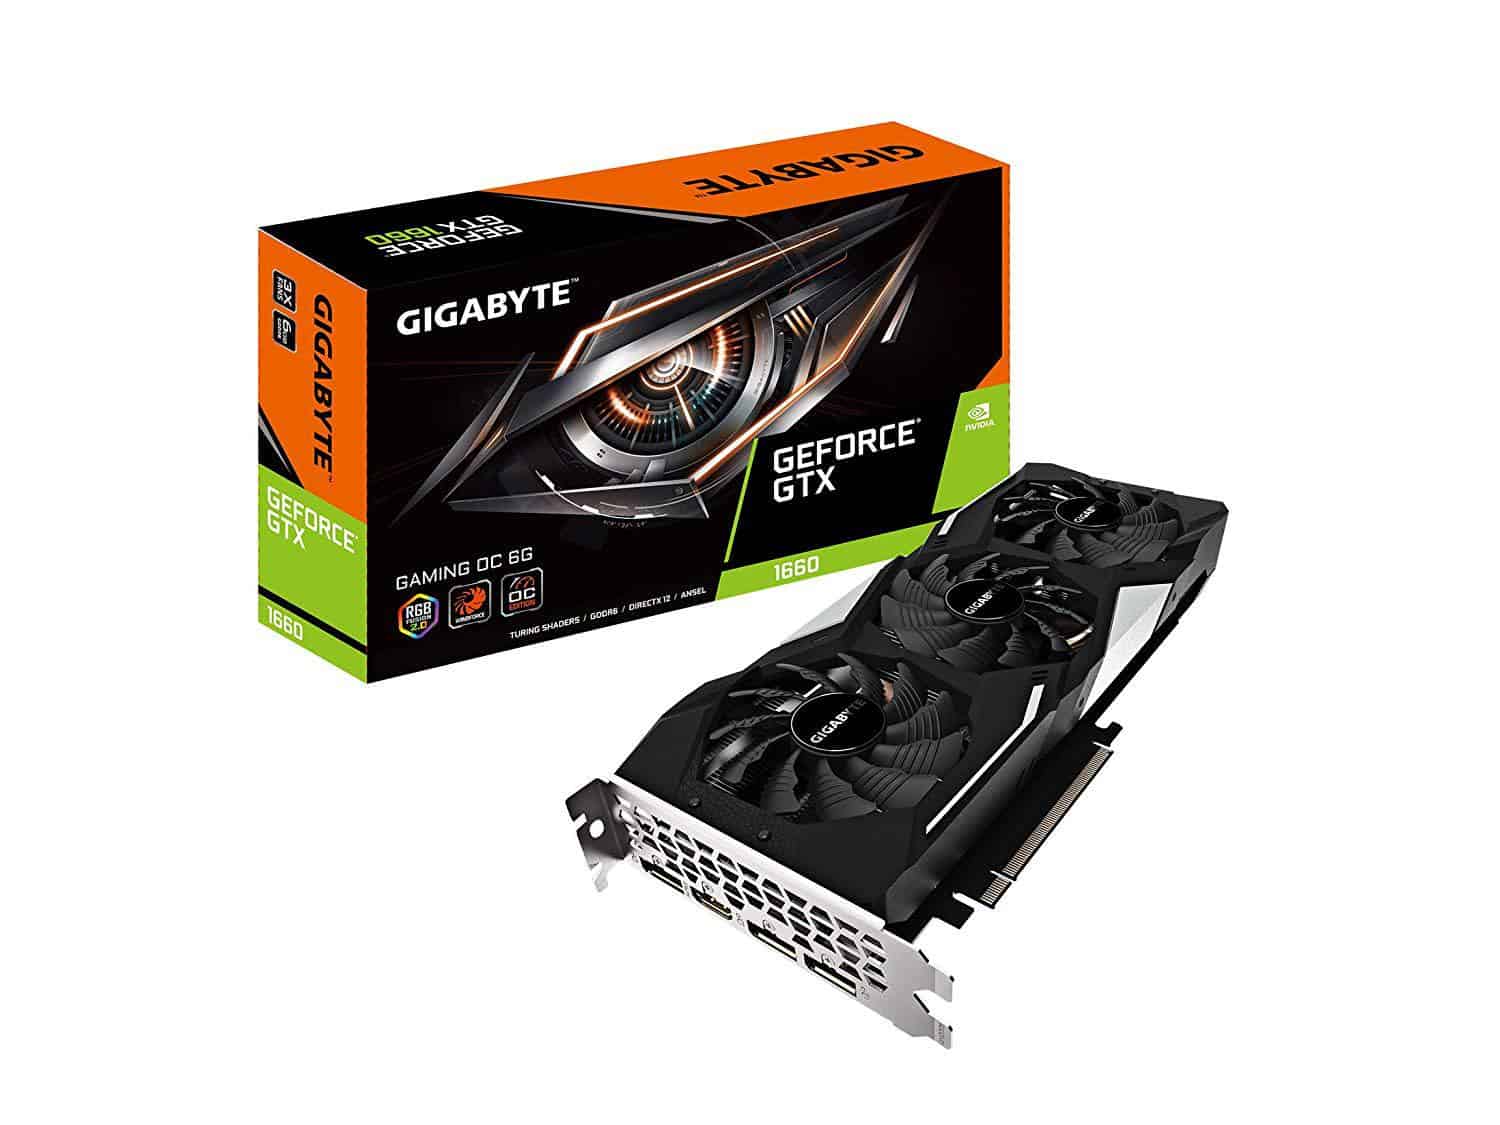 Gigabyte GeForce GTX 1660 GAMING OC 6G